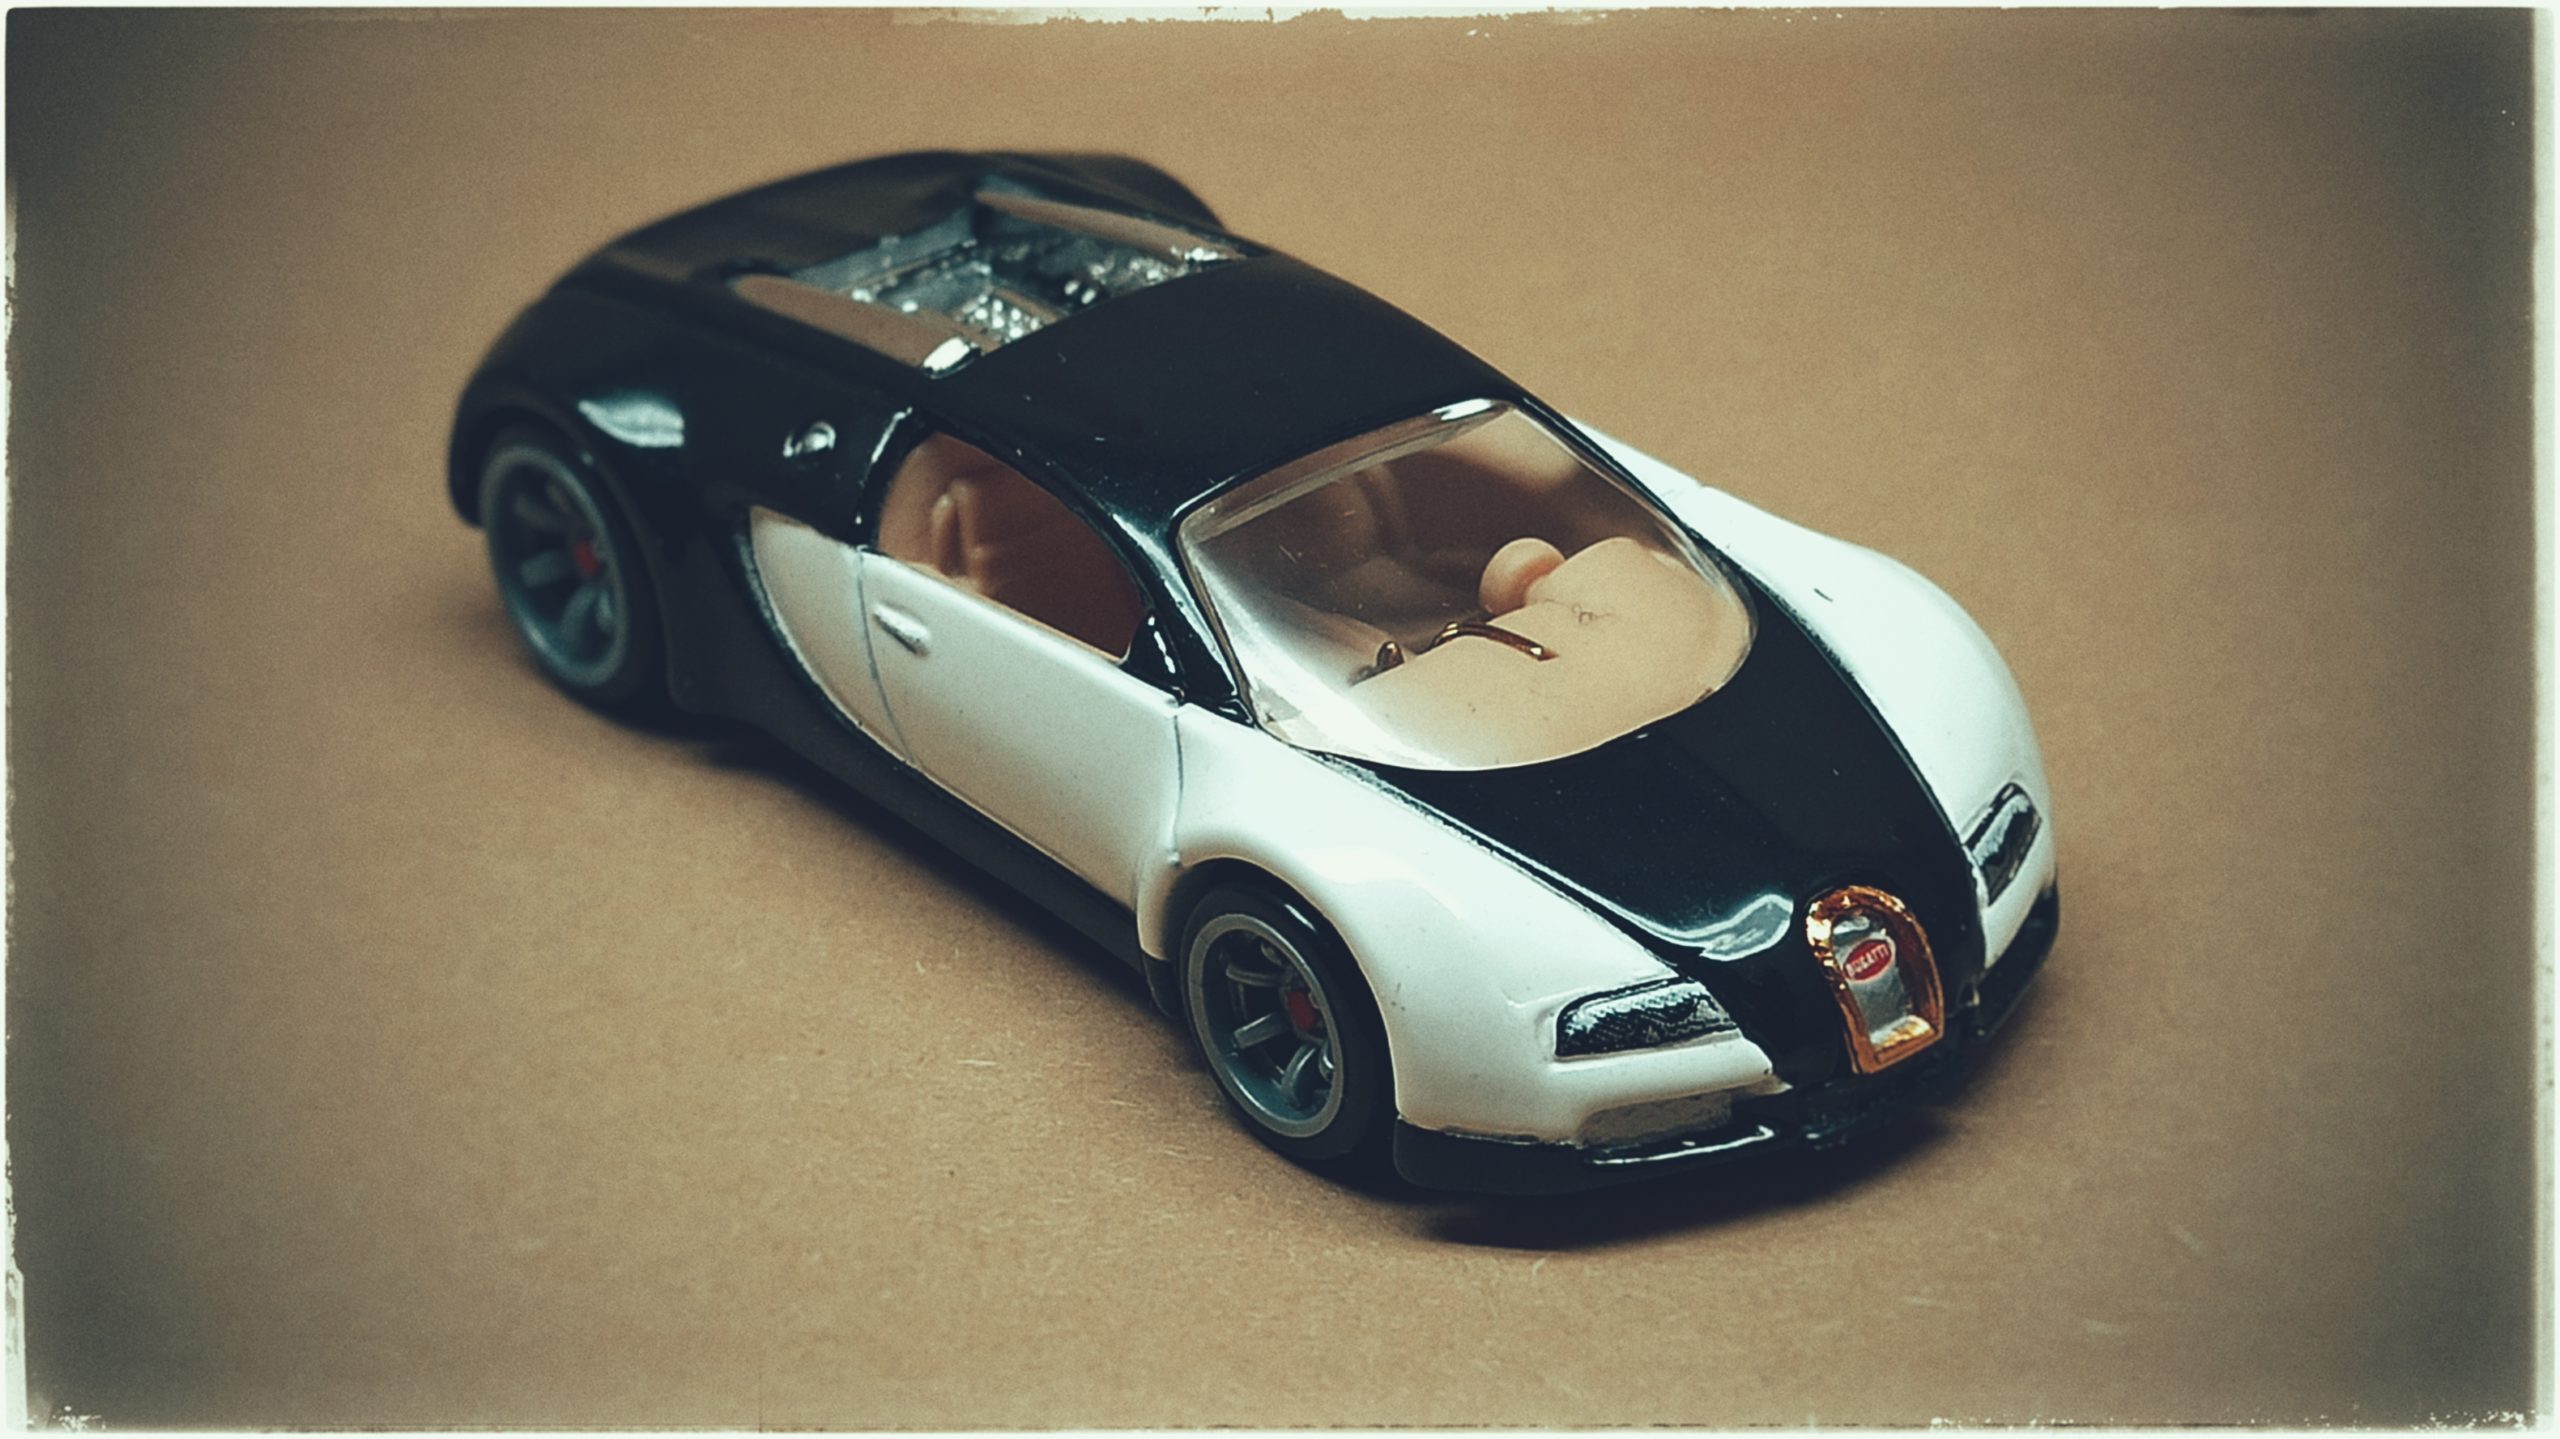 Hot Wheels Bugatti Veyron (R8483) 2010 Speed Machines black & white